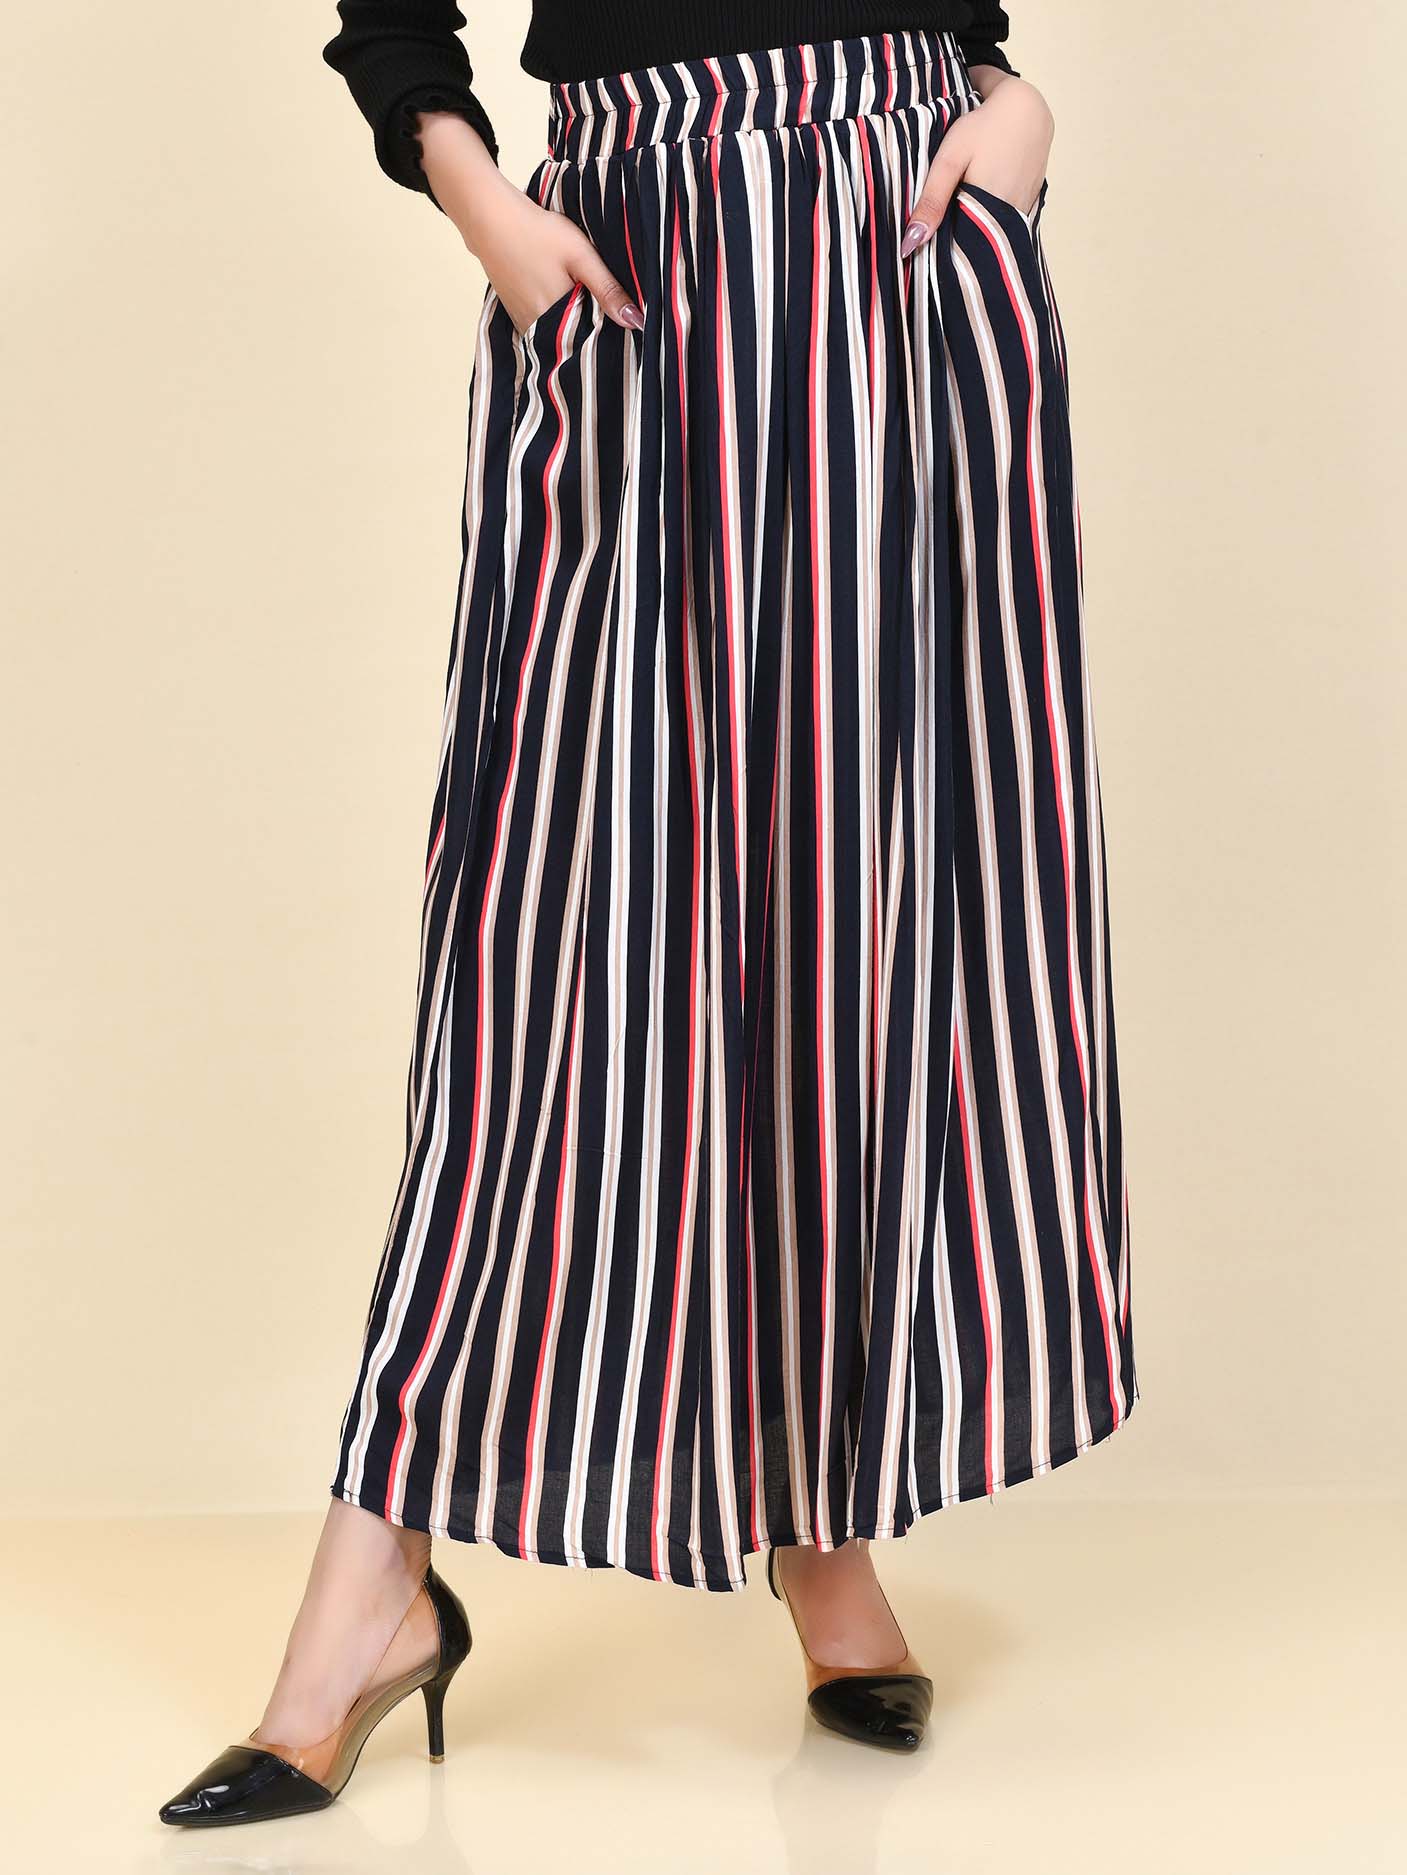 Striped Grip Skirt